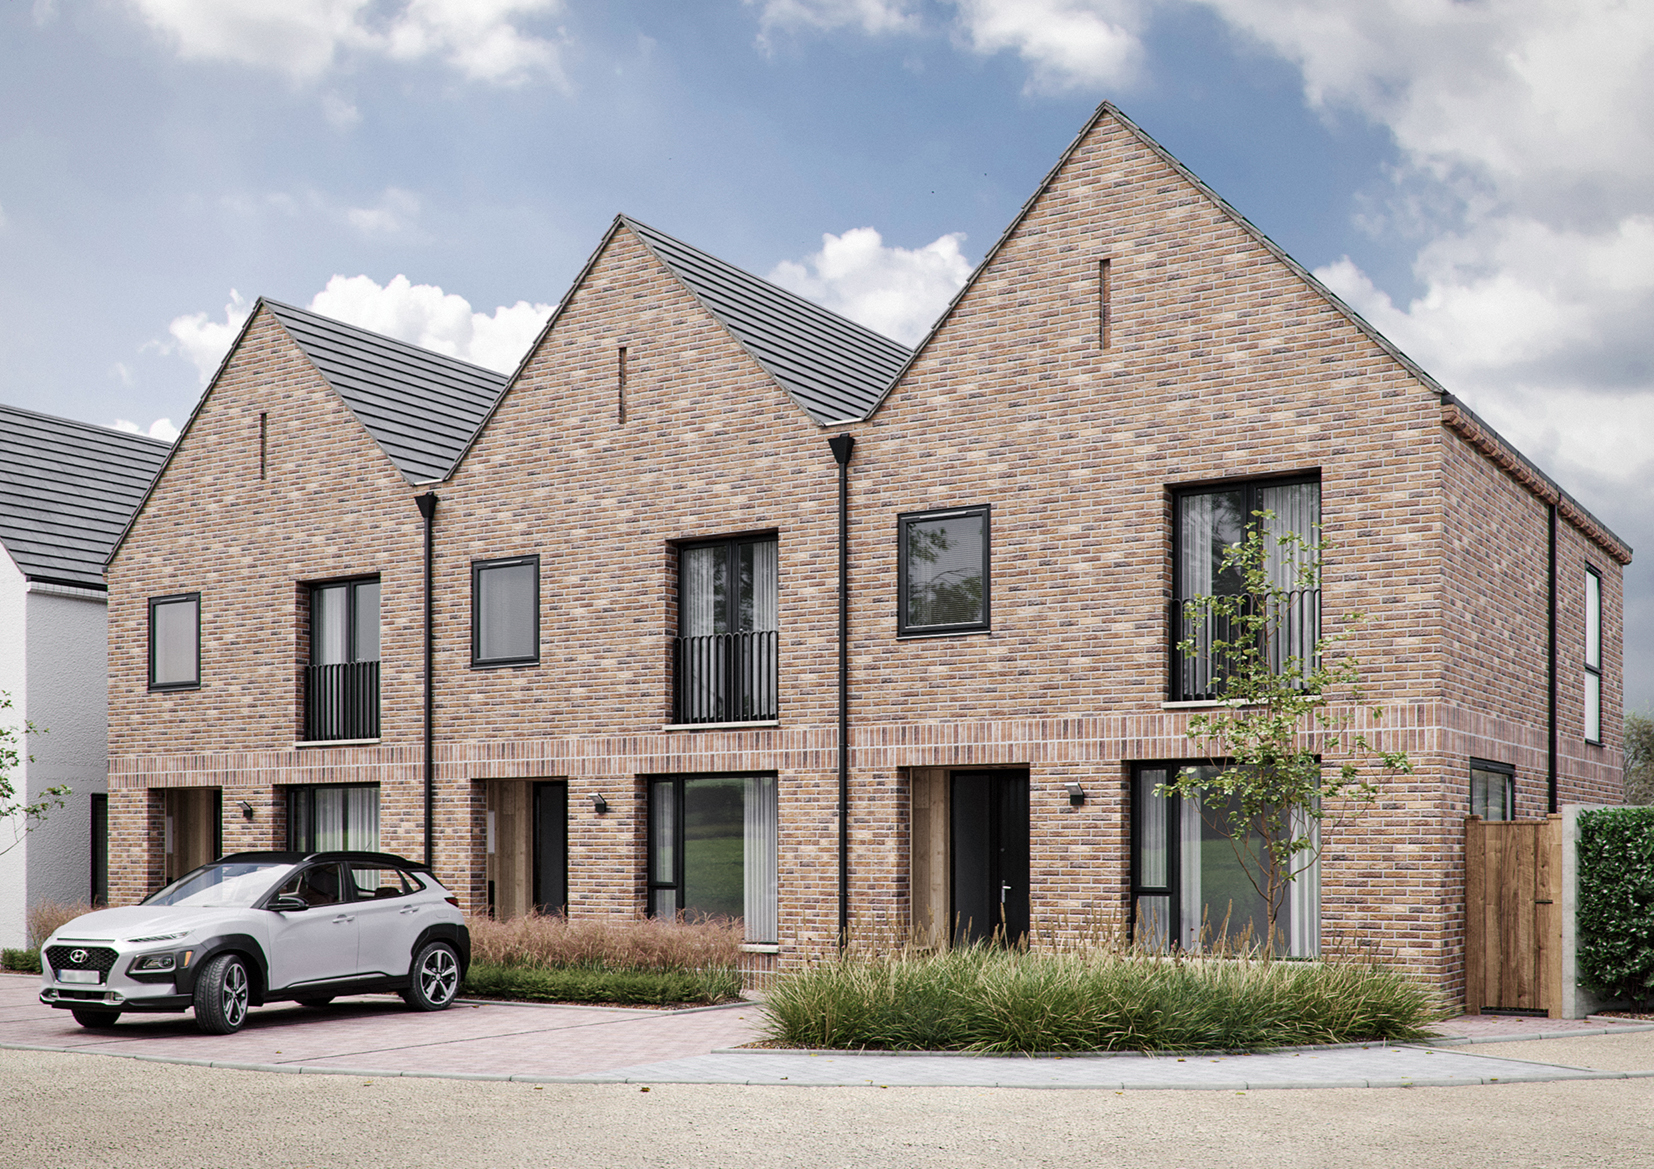 Housebuilder has designs on top quality developments @StonewoodPart